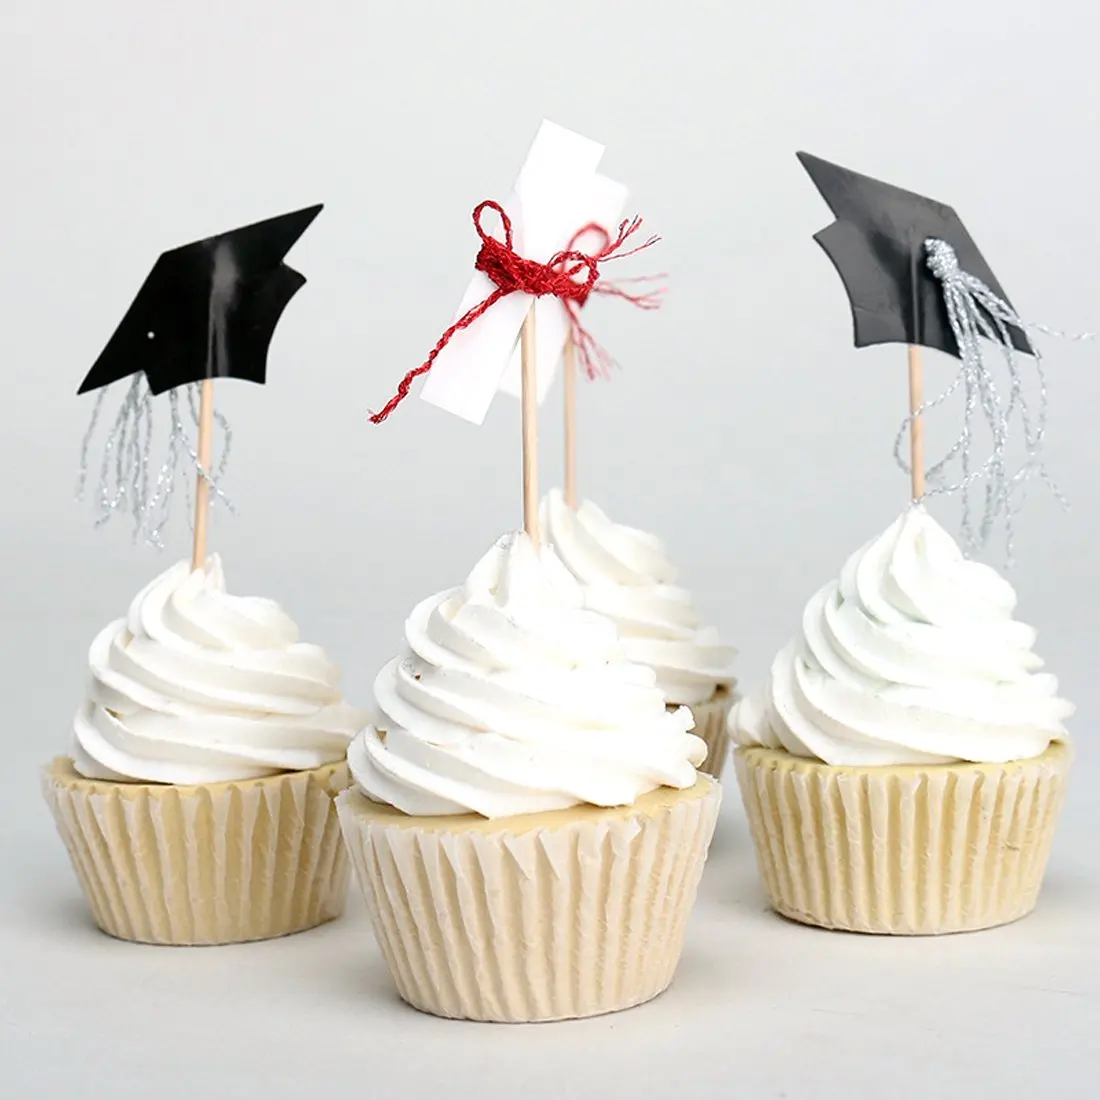 JANOU Graduation Cap 2019 Black Glitter Cake Topper Cupcake Toothpick Toppers Birthday Wedding Graduation Party Favors Pack 24pcs